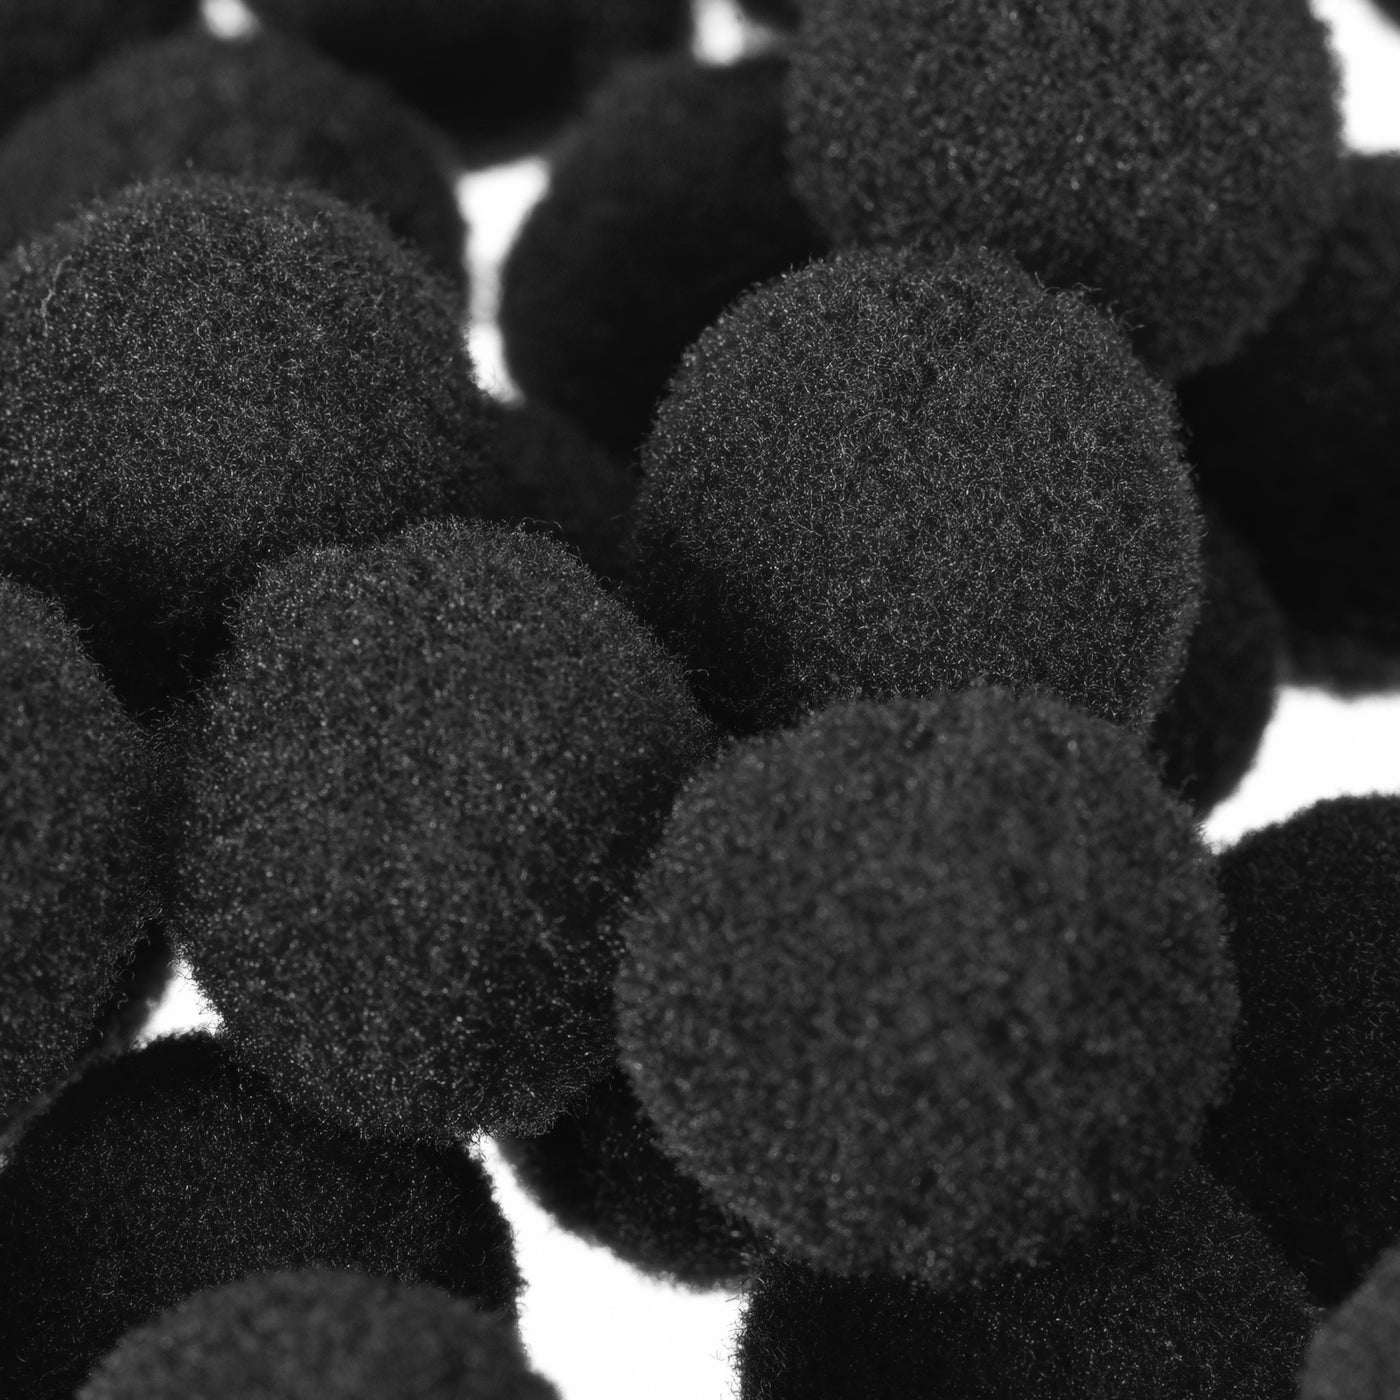 Harfington Pom Felt Balls Fabric 1.5cm 15mm Black for Crafts Project DIY 100 Pcs